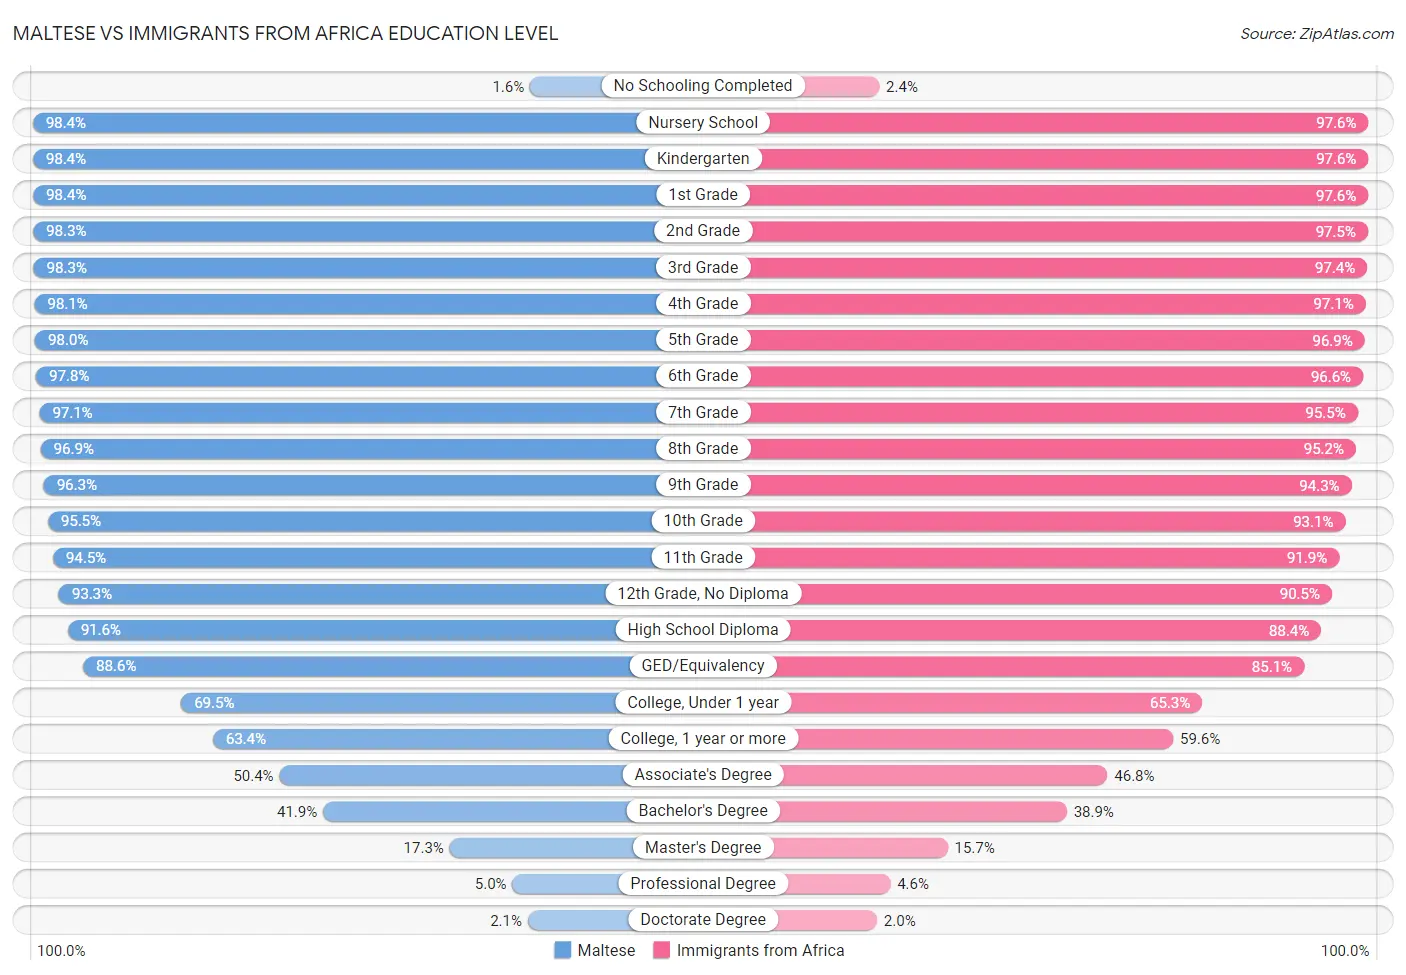 Maltese vs Immigrants from Africa Education Level